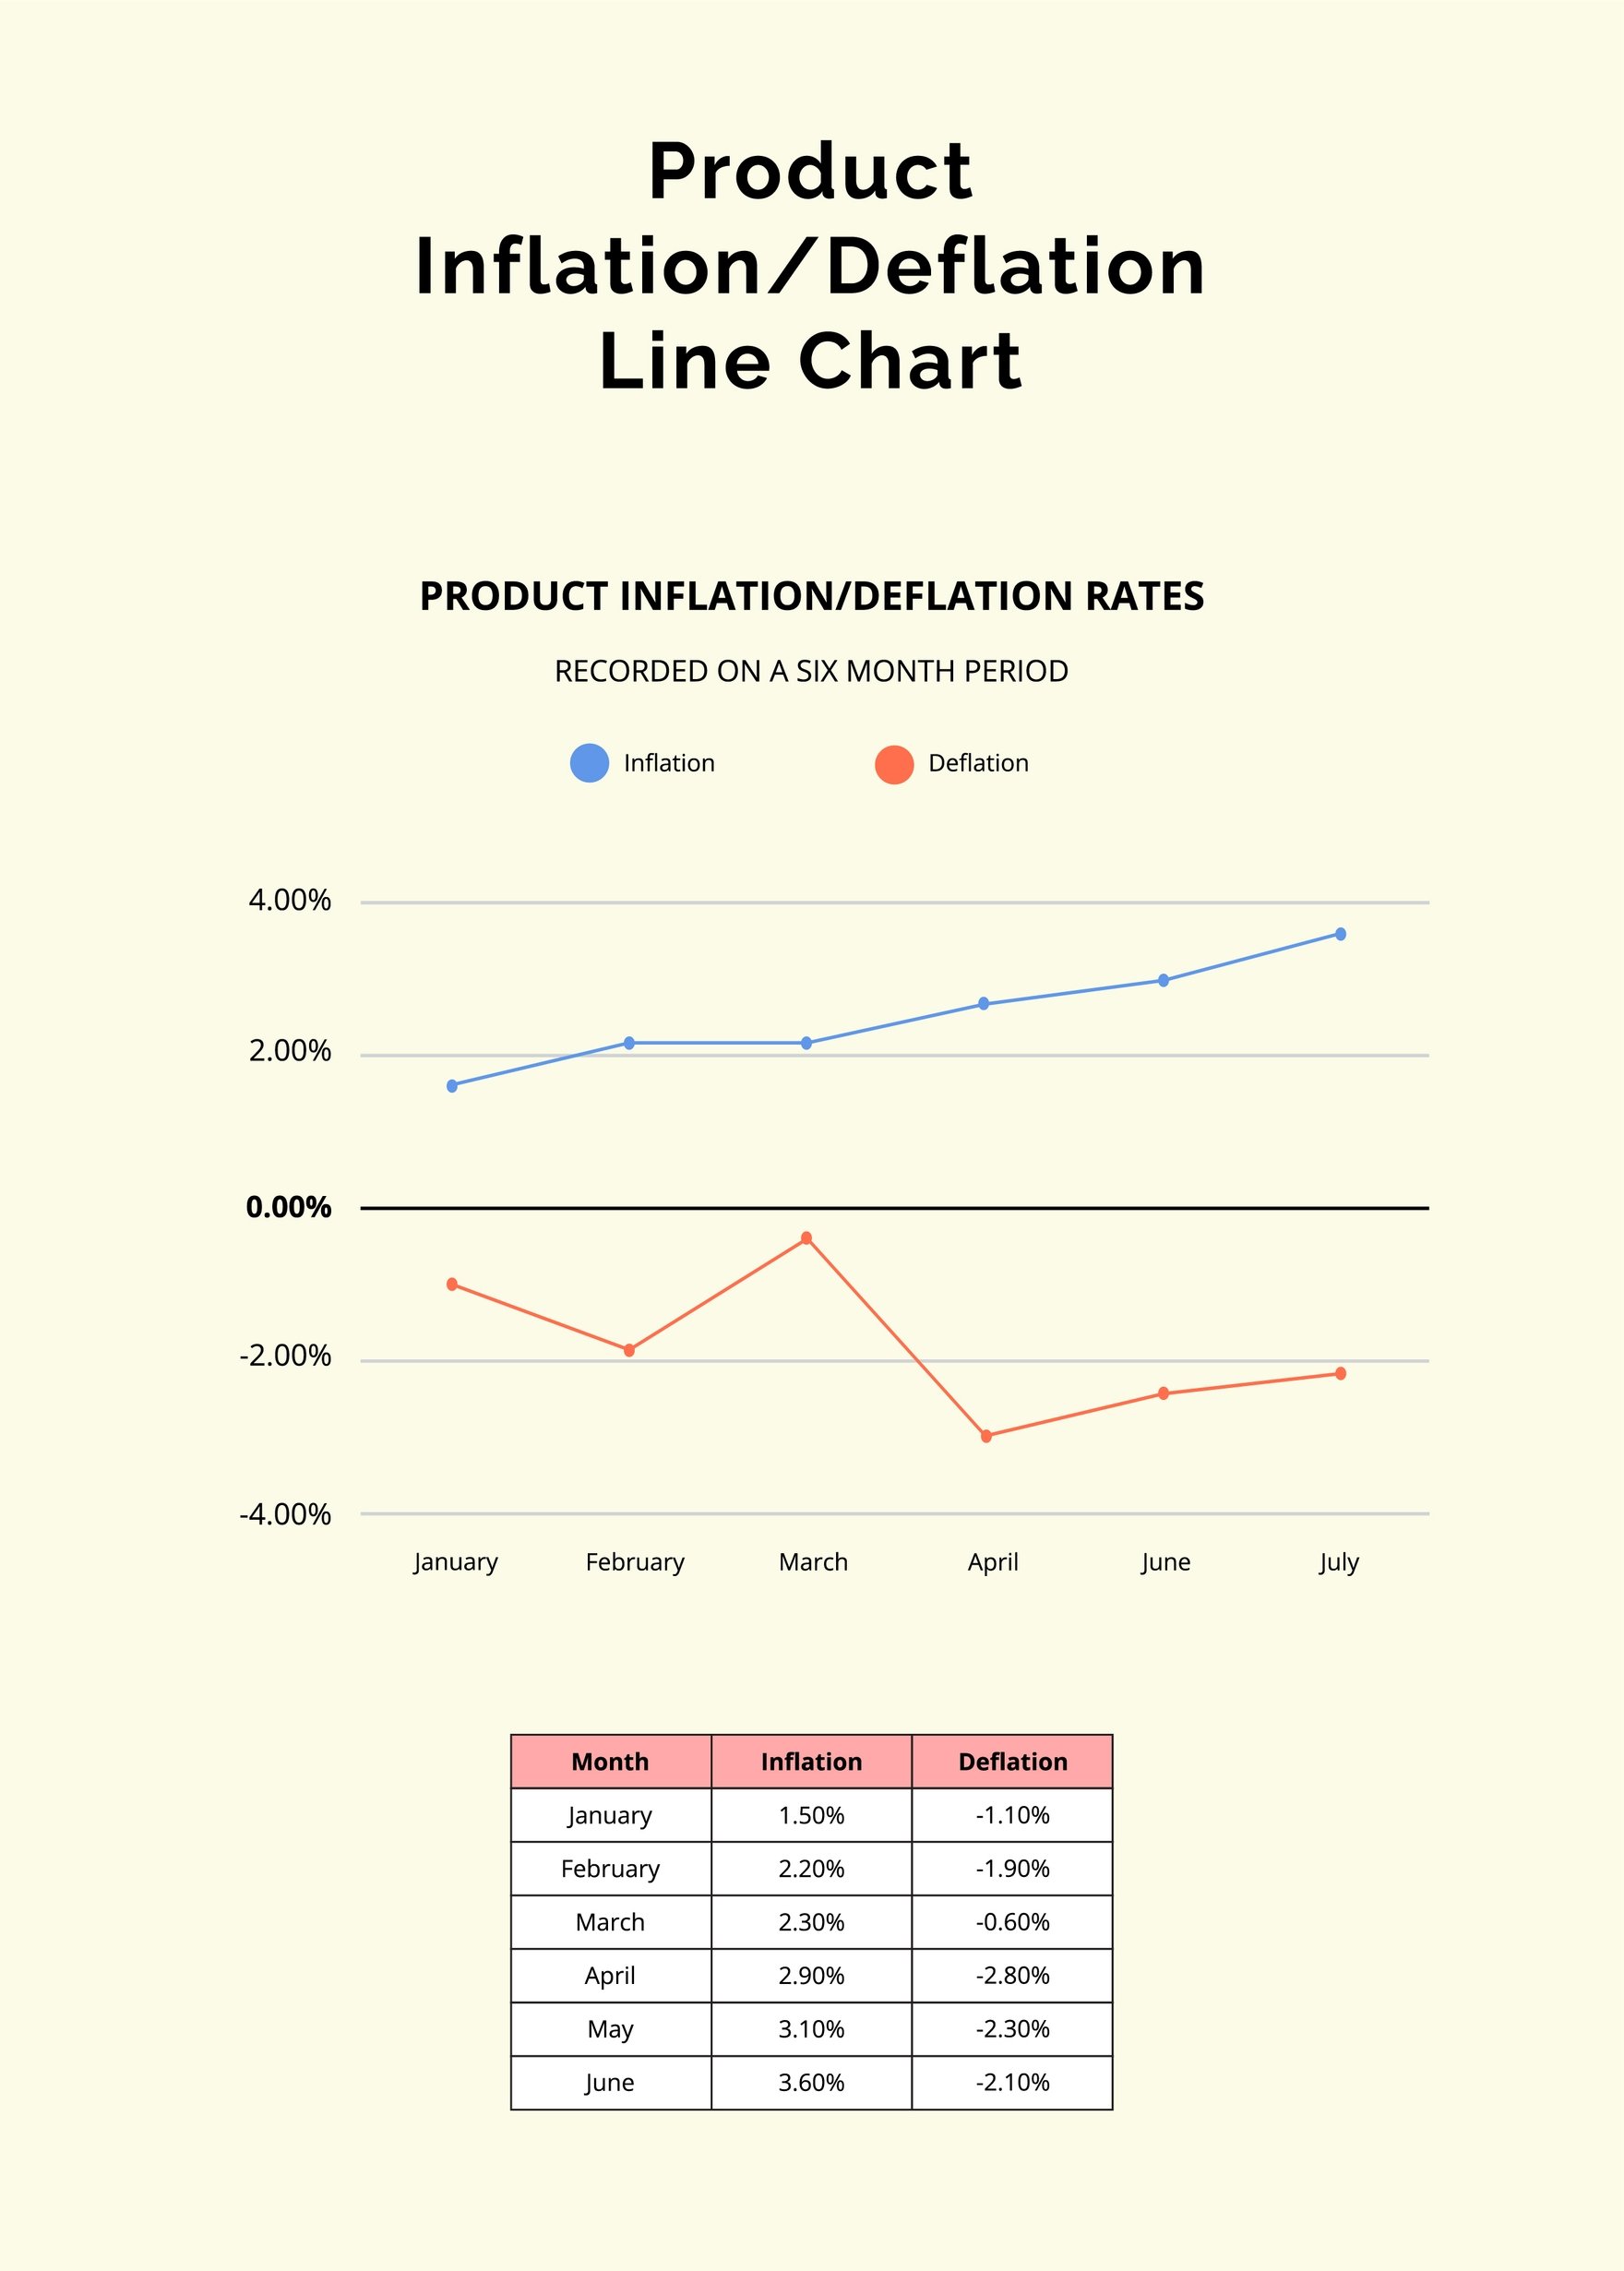 Product Inflation/Deflation Line Chart